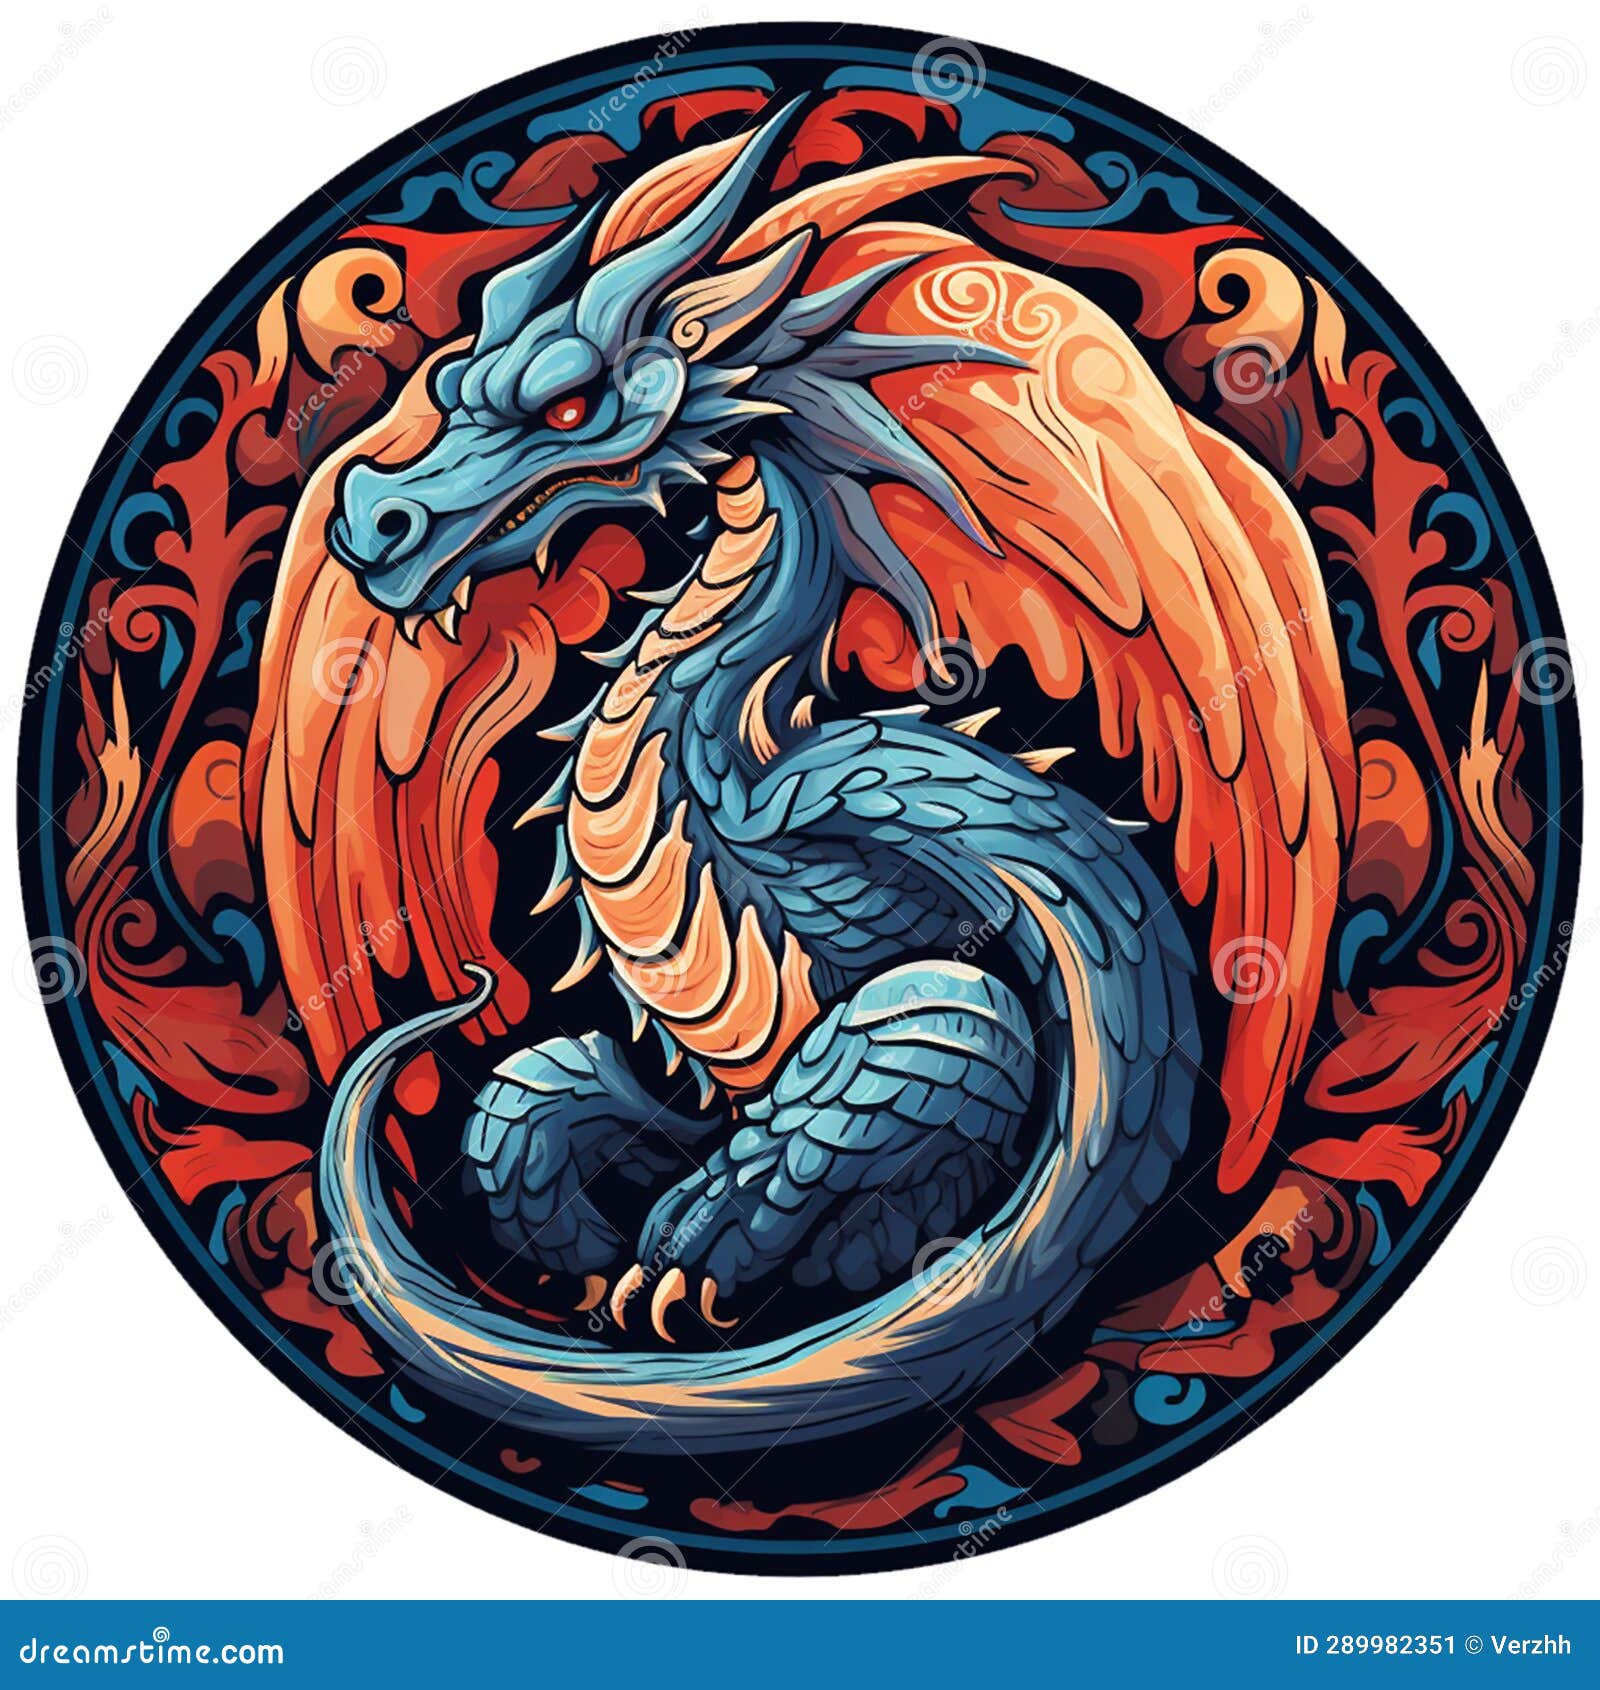 graphic logo of a mesoamerican dragon in a circle 3